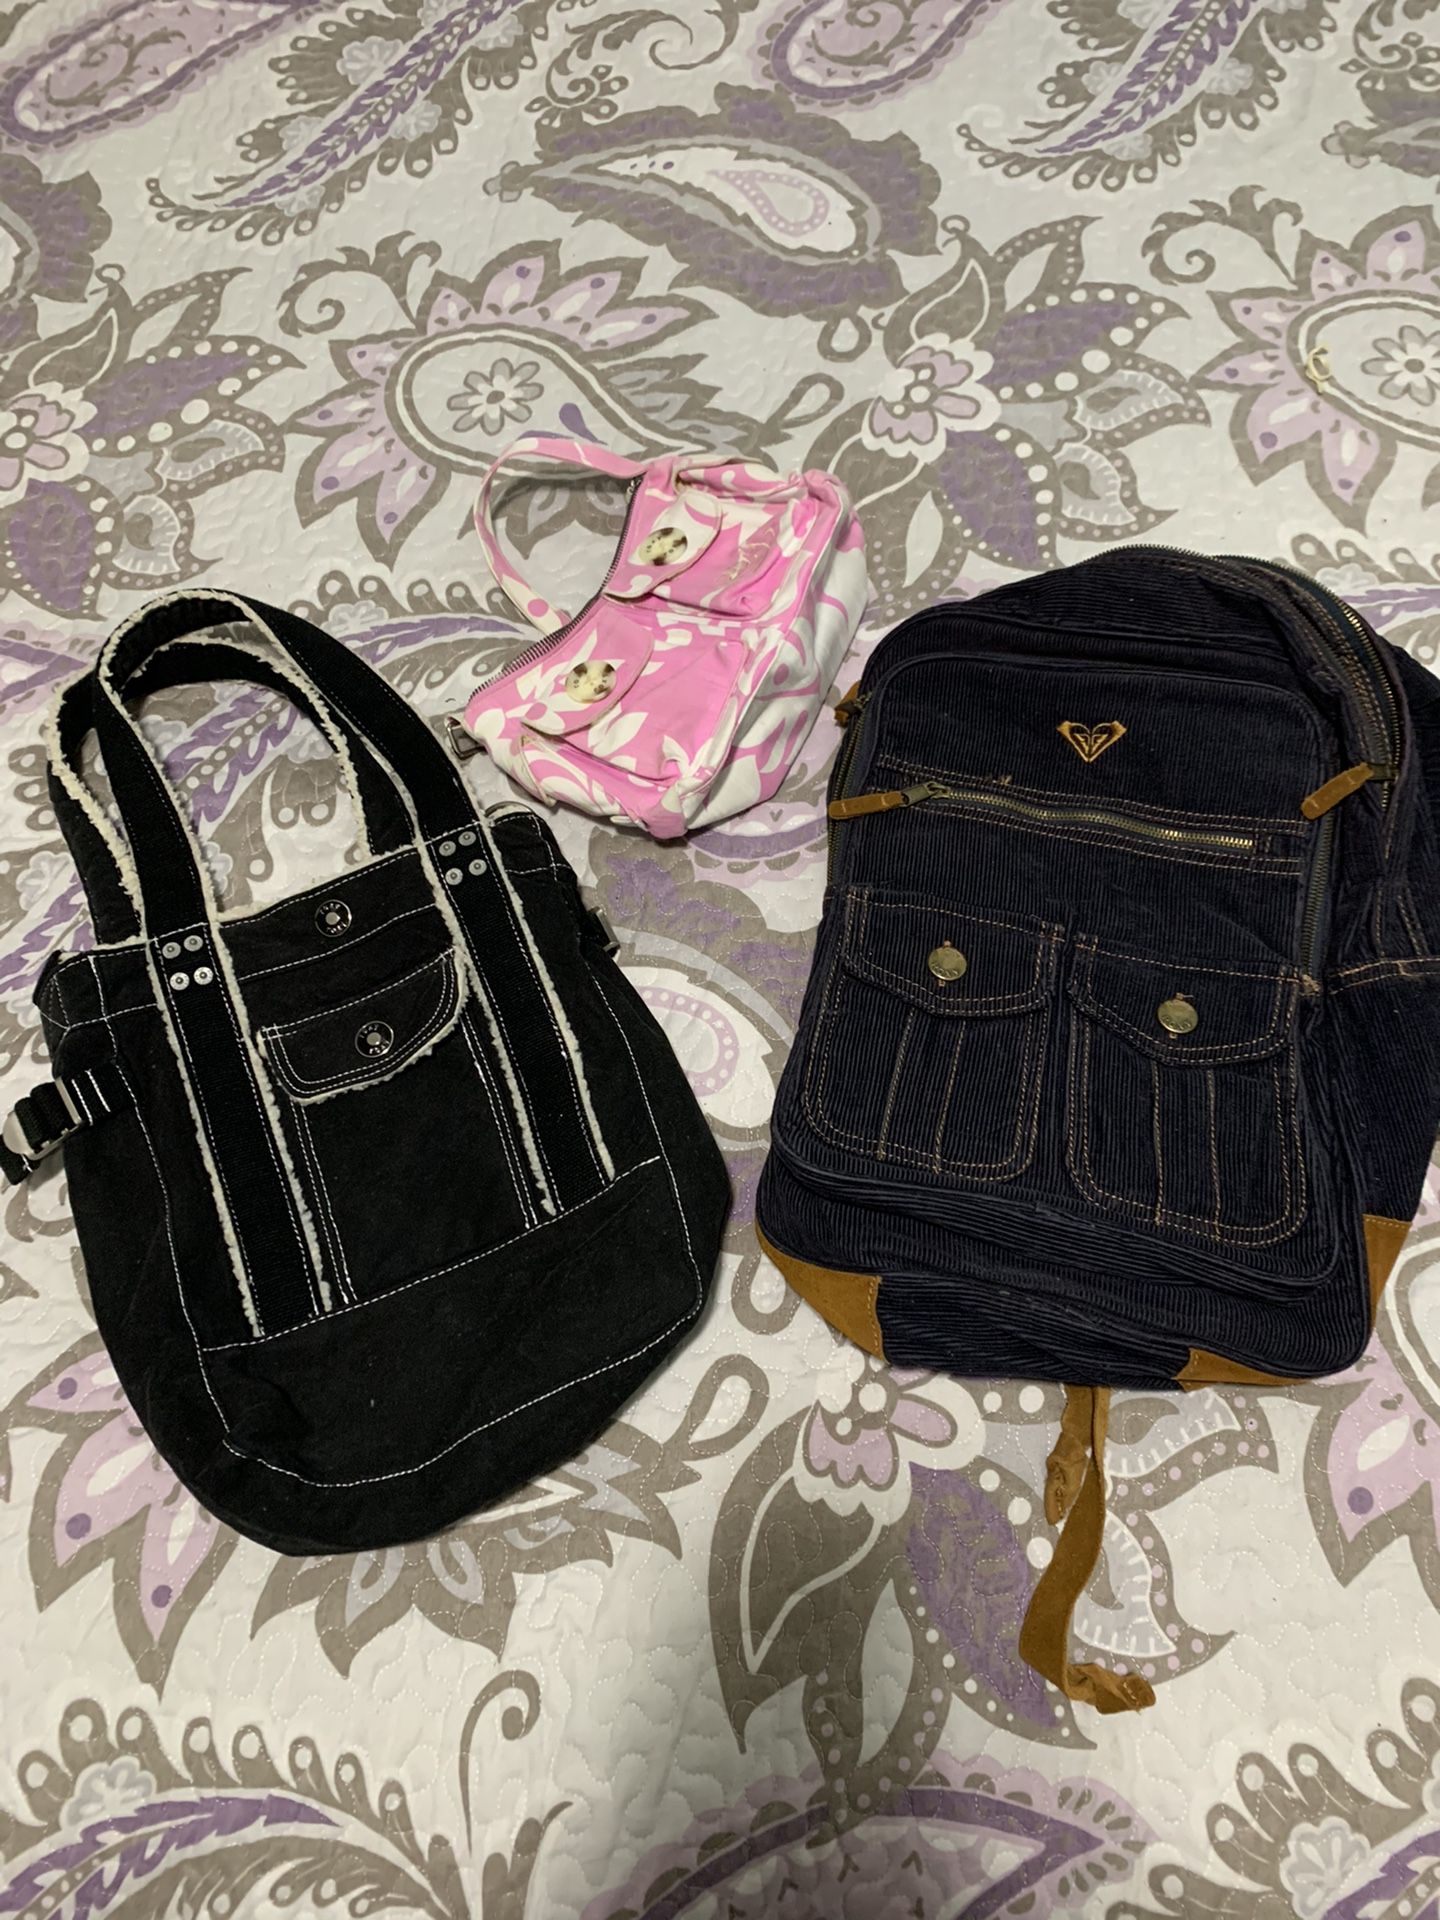 Roxy bags/purse